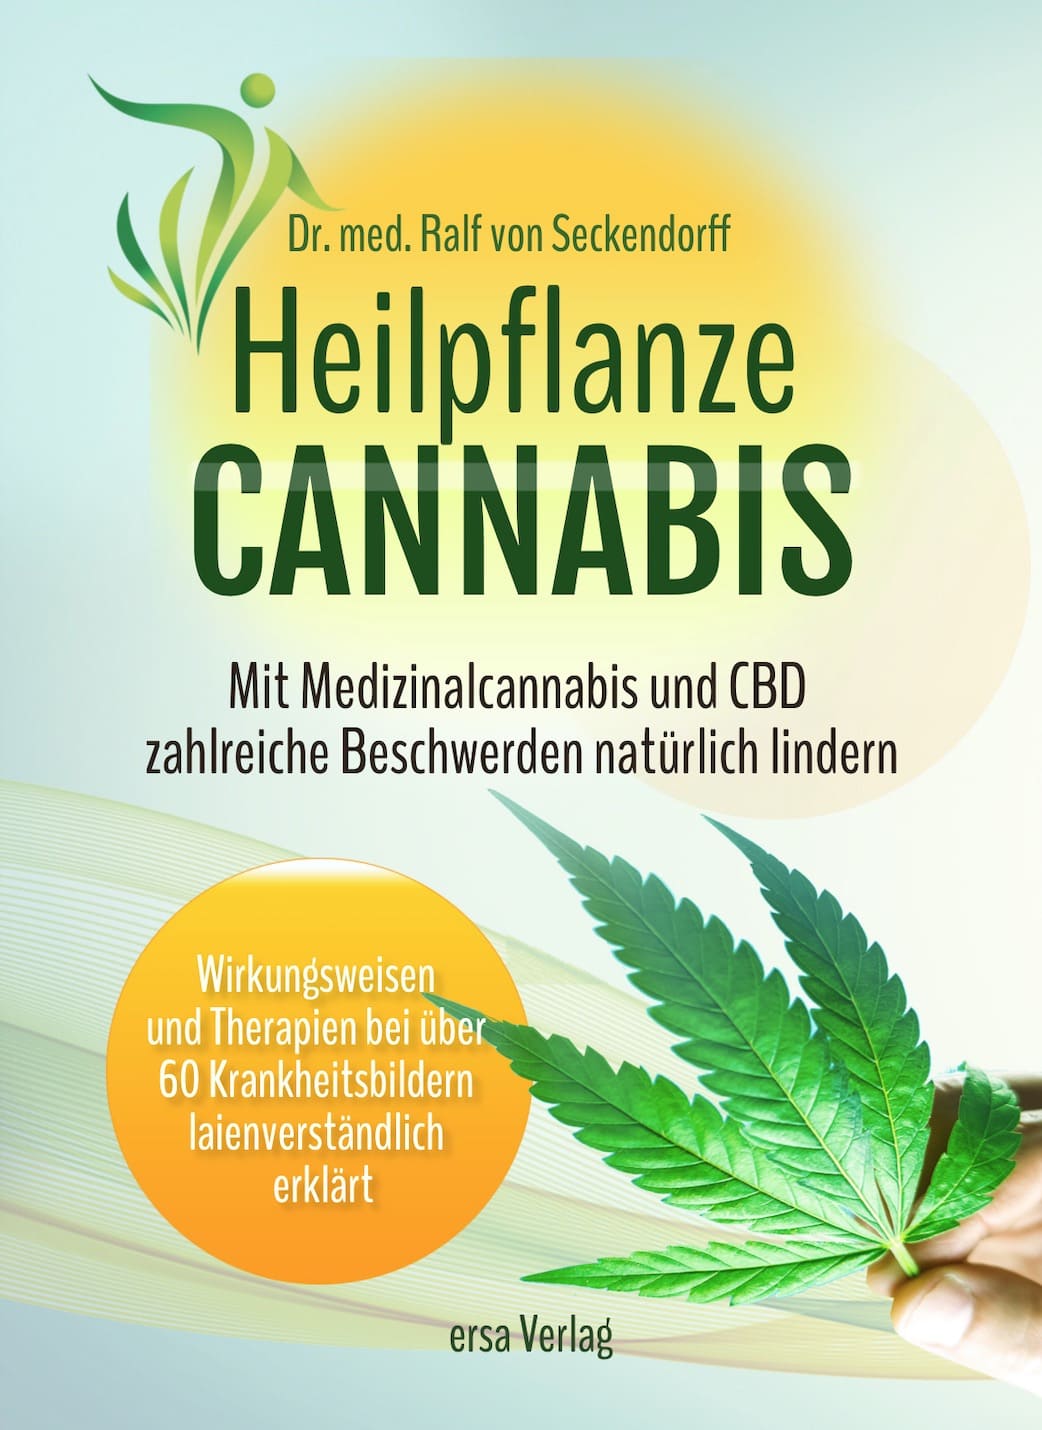 Medizinalcannabis